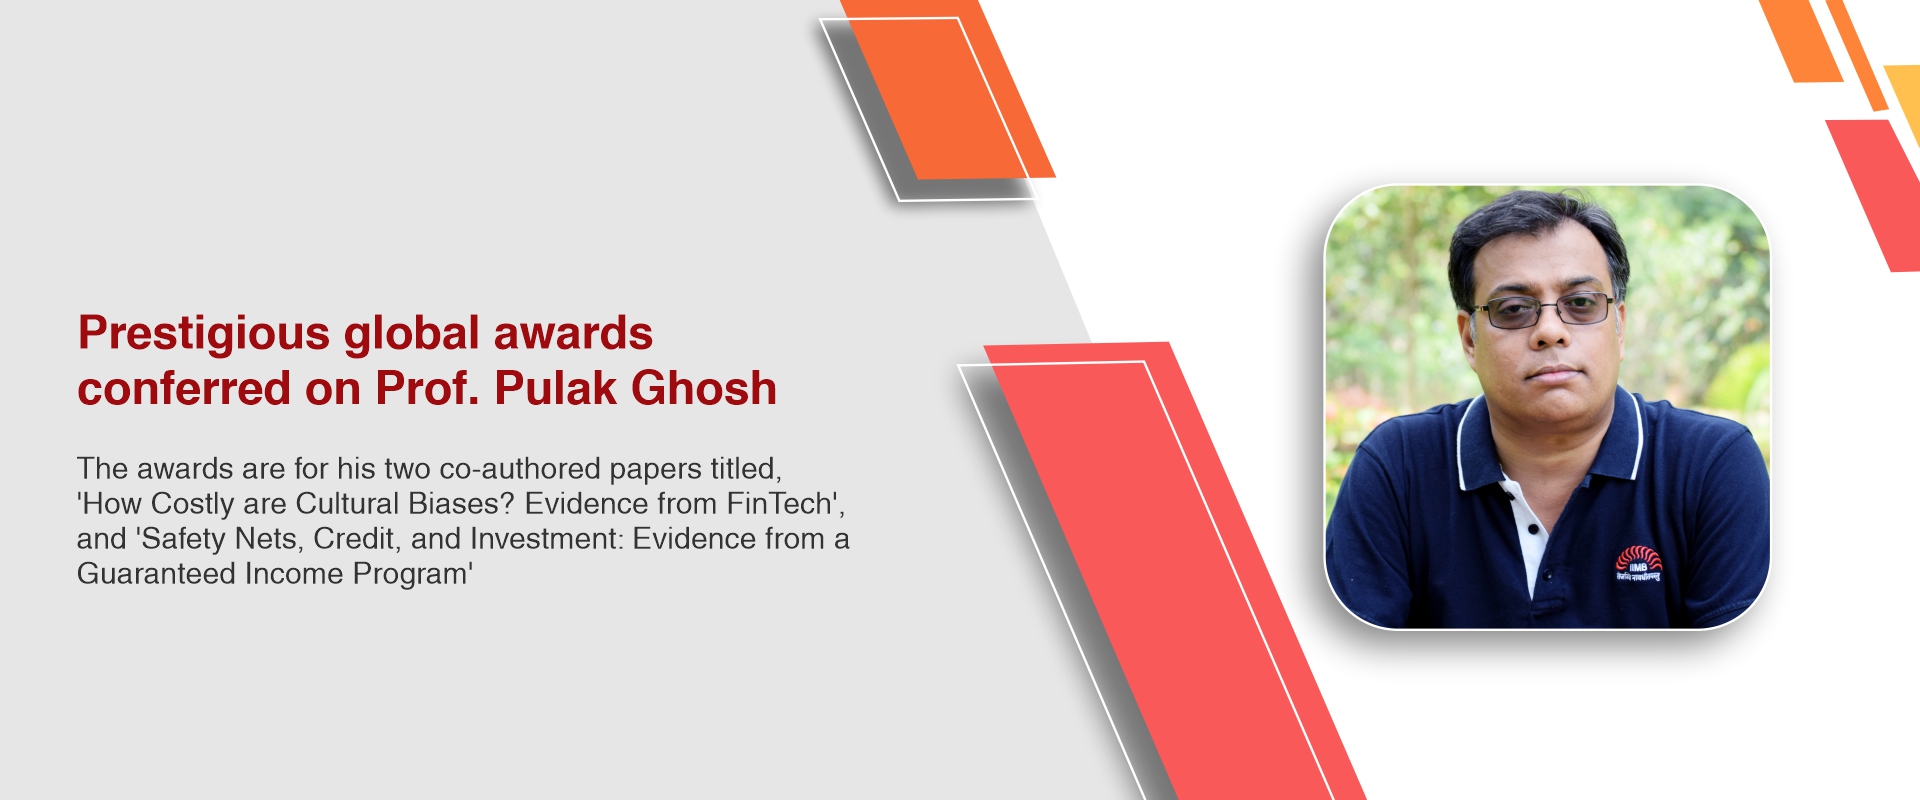 Prestigious global awards conferred on Prof. Pulak Ghosh